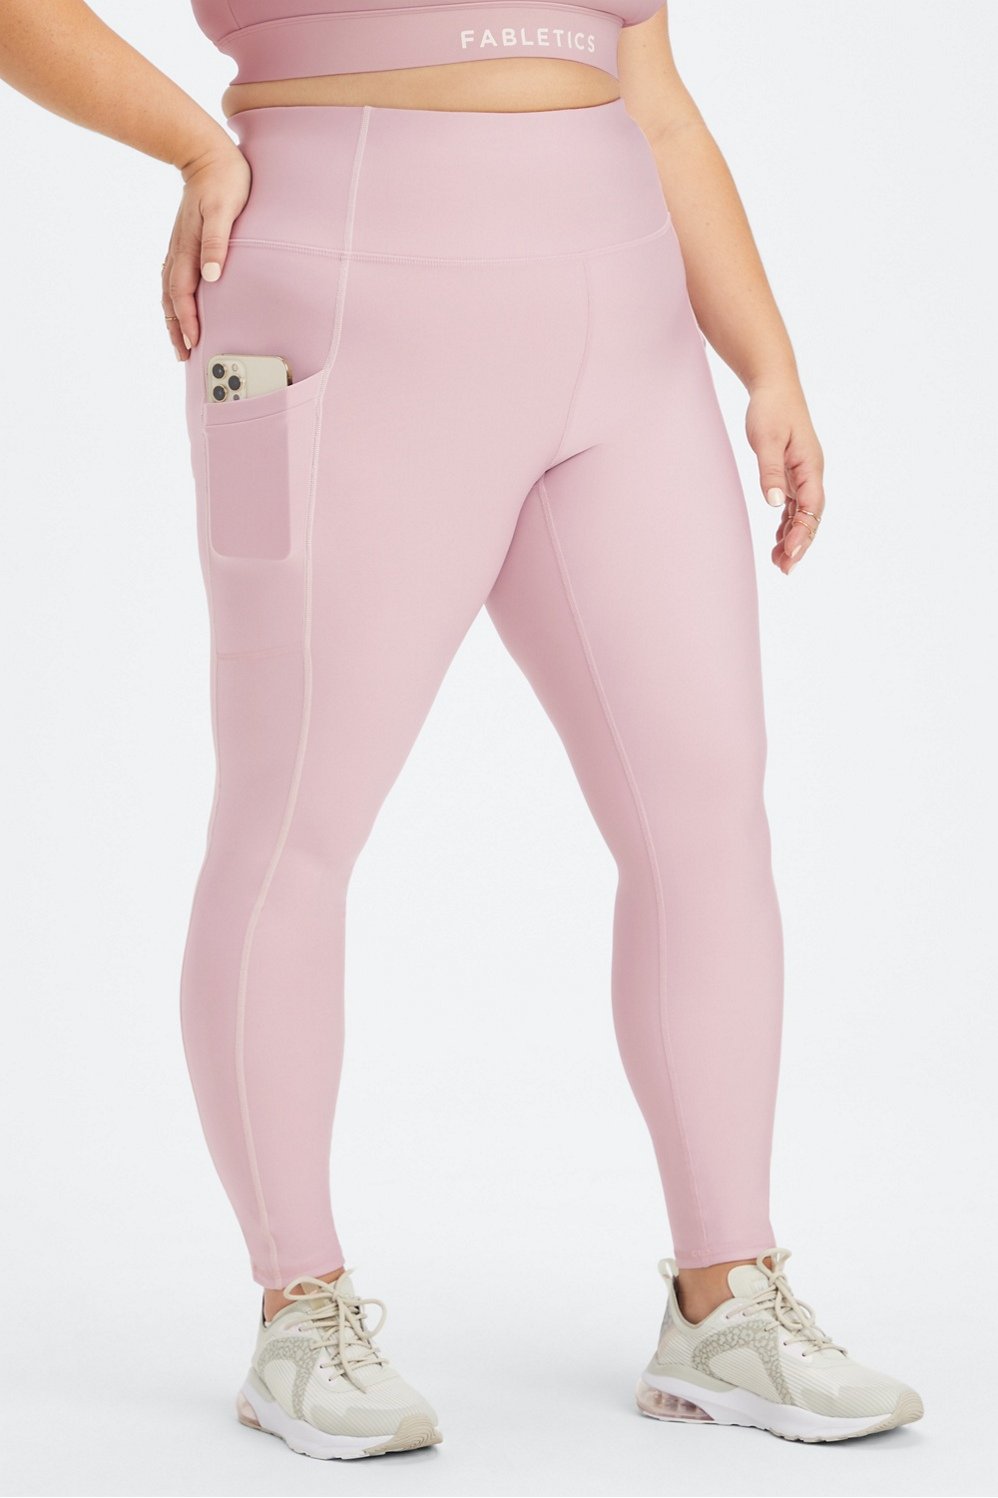 Nwt Victoria's Secret Pink Burnt Orange Cozy Fleece Lined Leggings L Lg